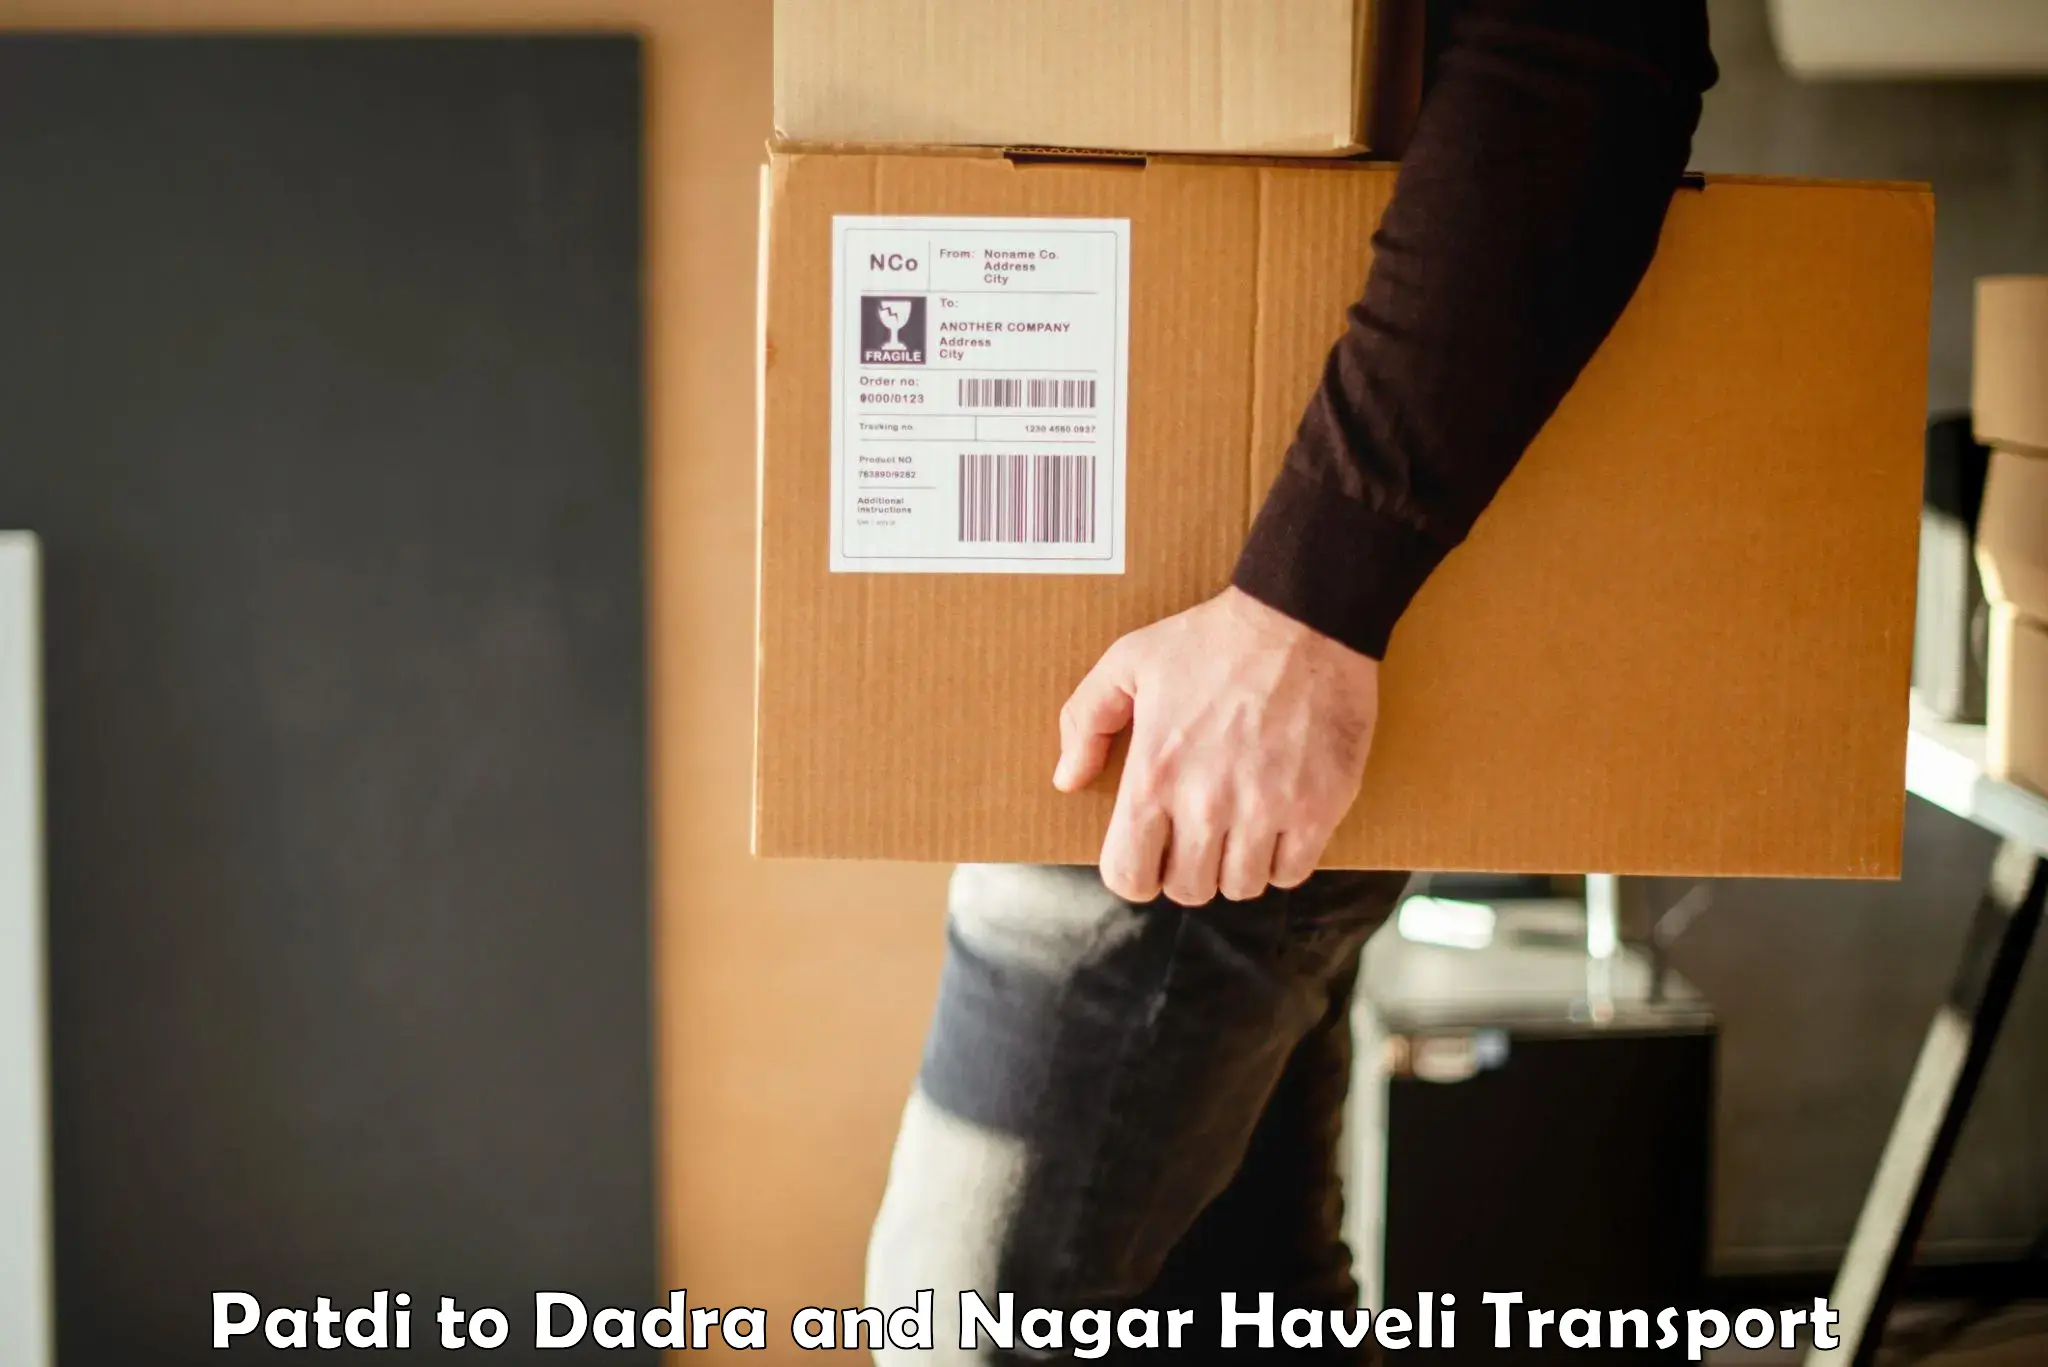 Delivery service Patdi to Dadra and Nagar Haveli